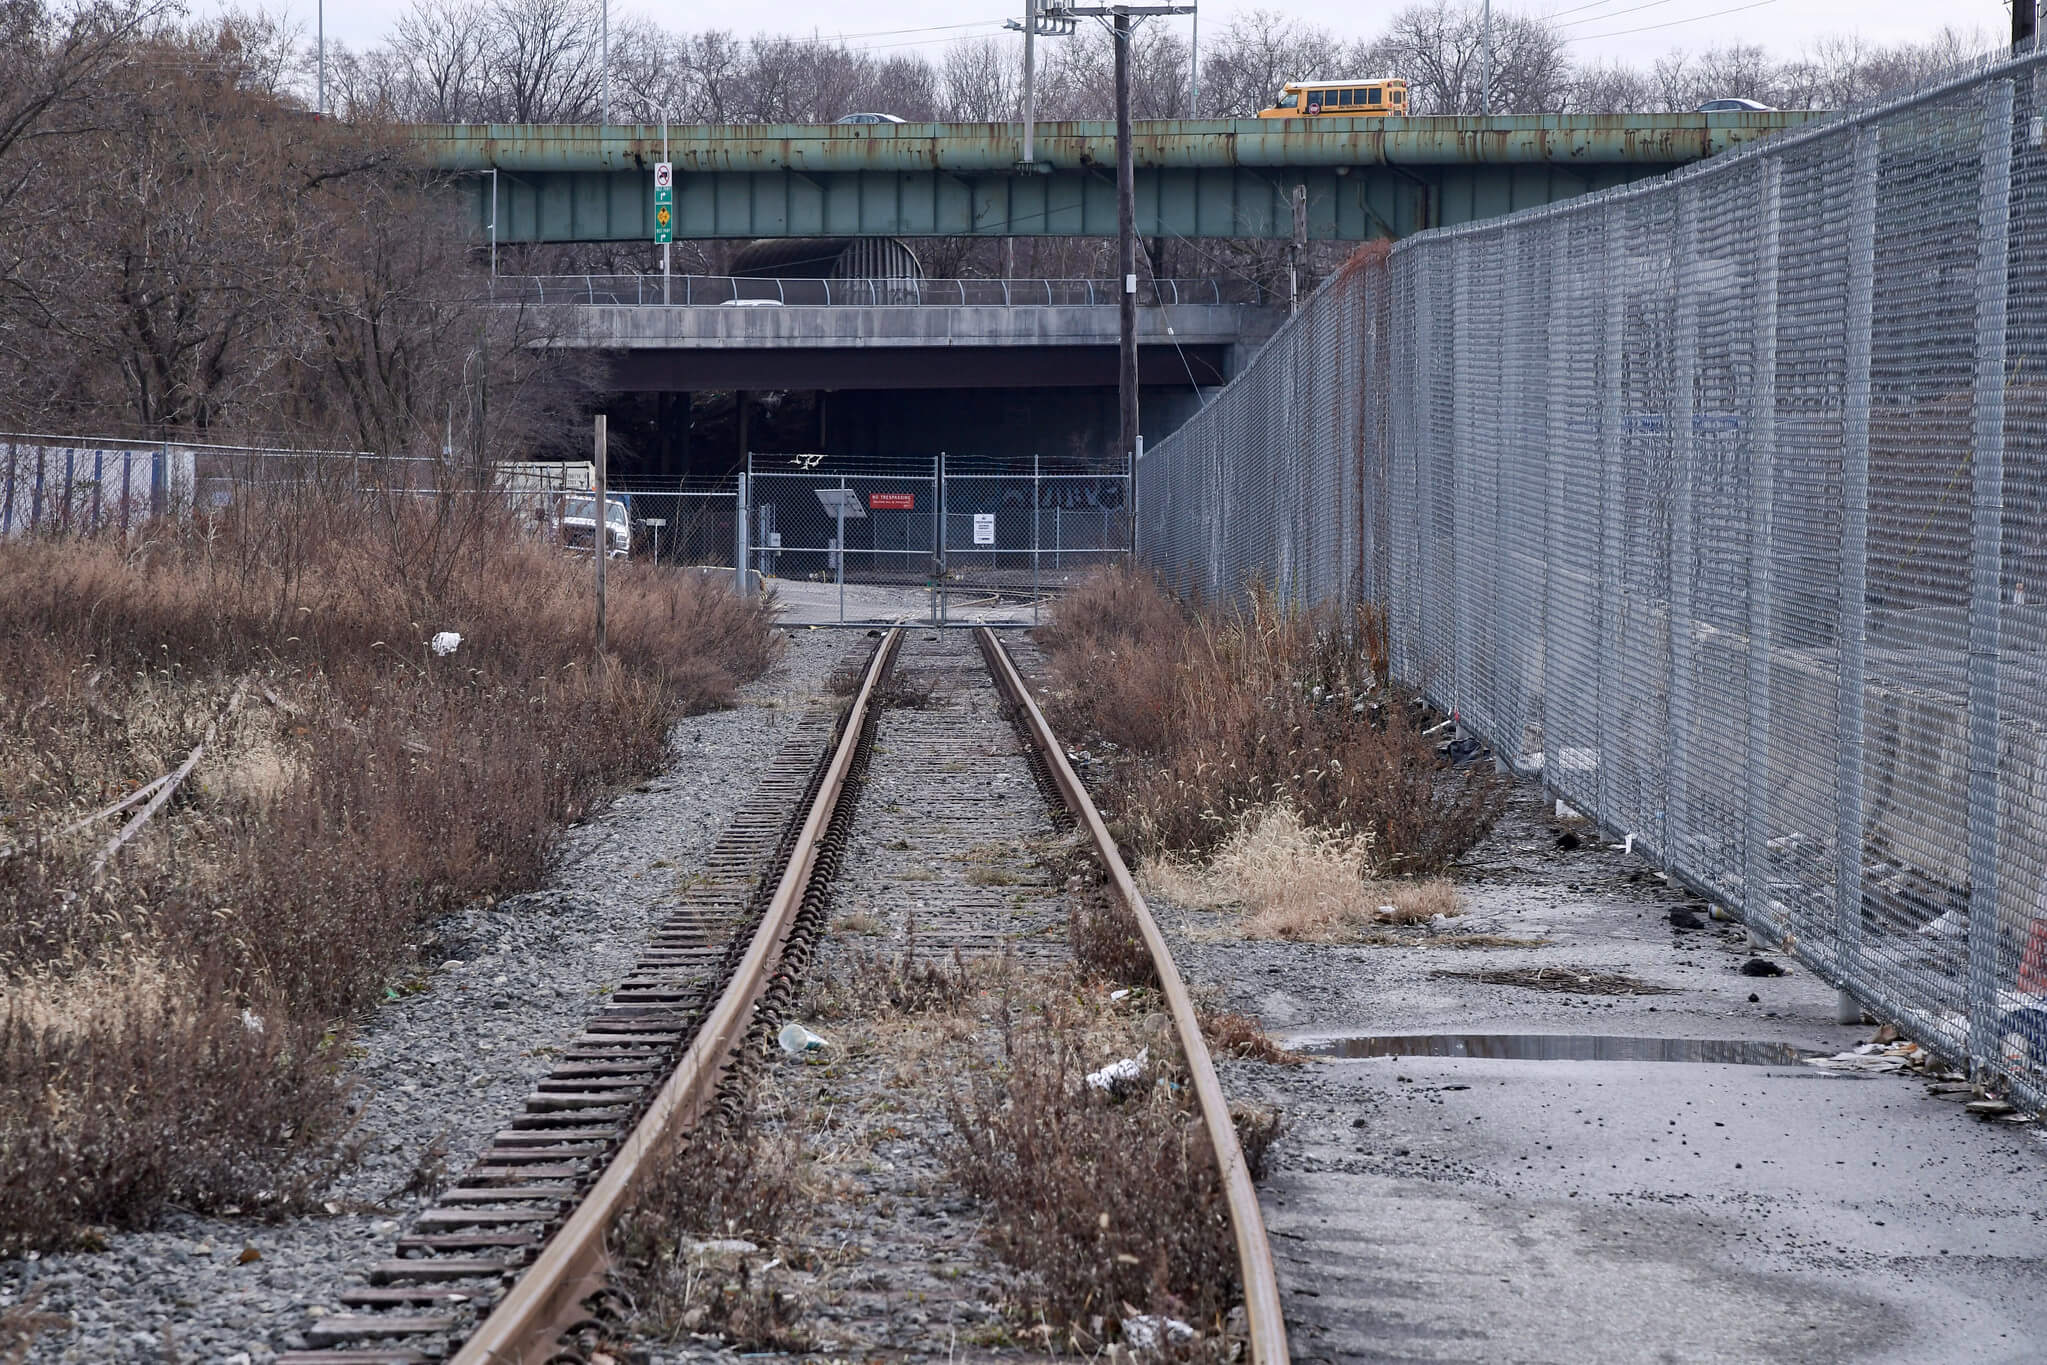 empty train tracks in an industrial area